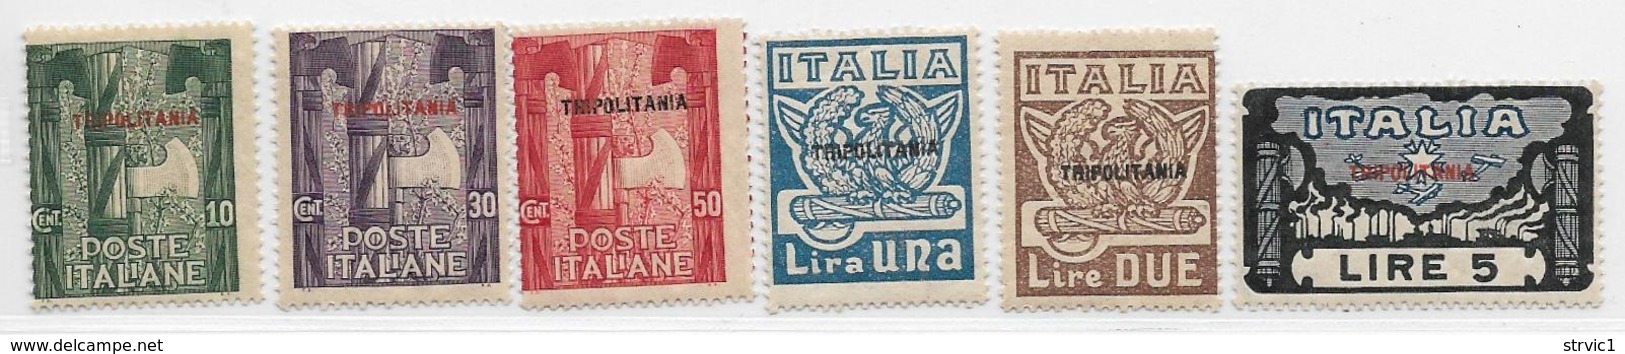 Tripolitania, Scott # 5-10 MNH Italy Fascisti Issue,overprinted,1923, CV$225.00 - Tripolitania